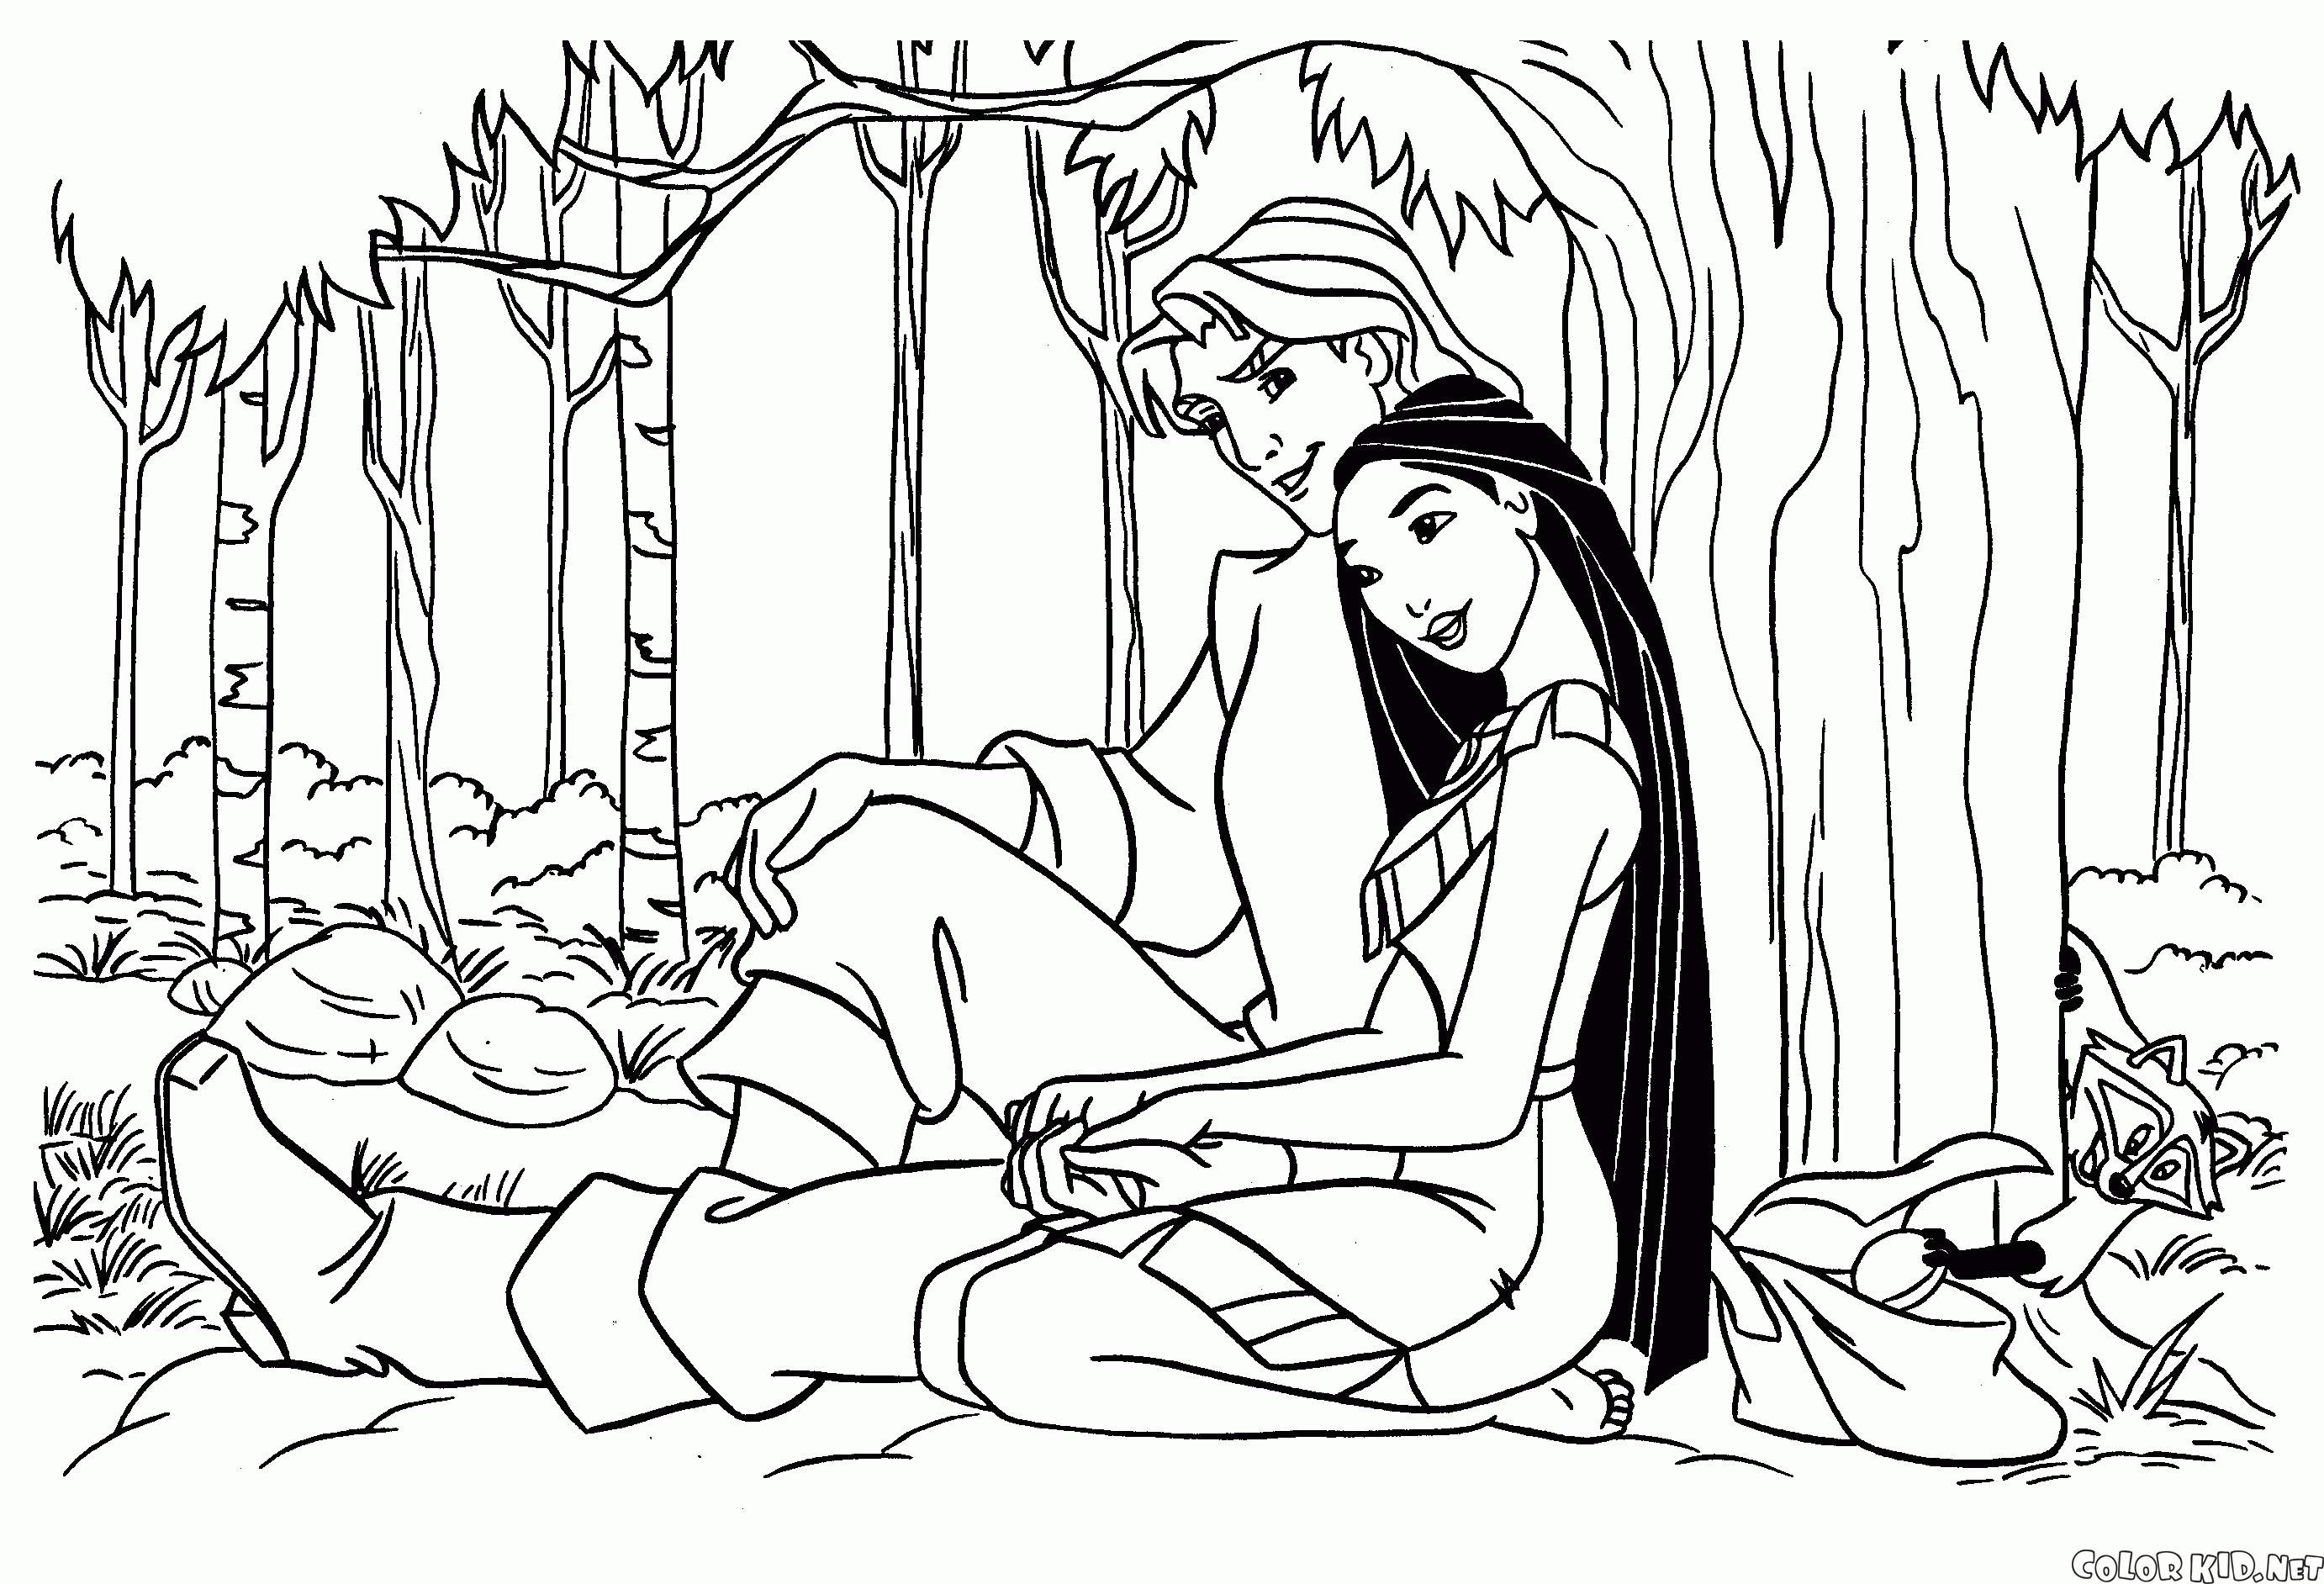 John and Pocahontas